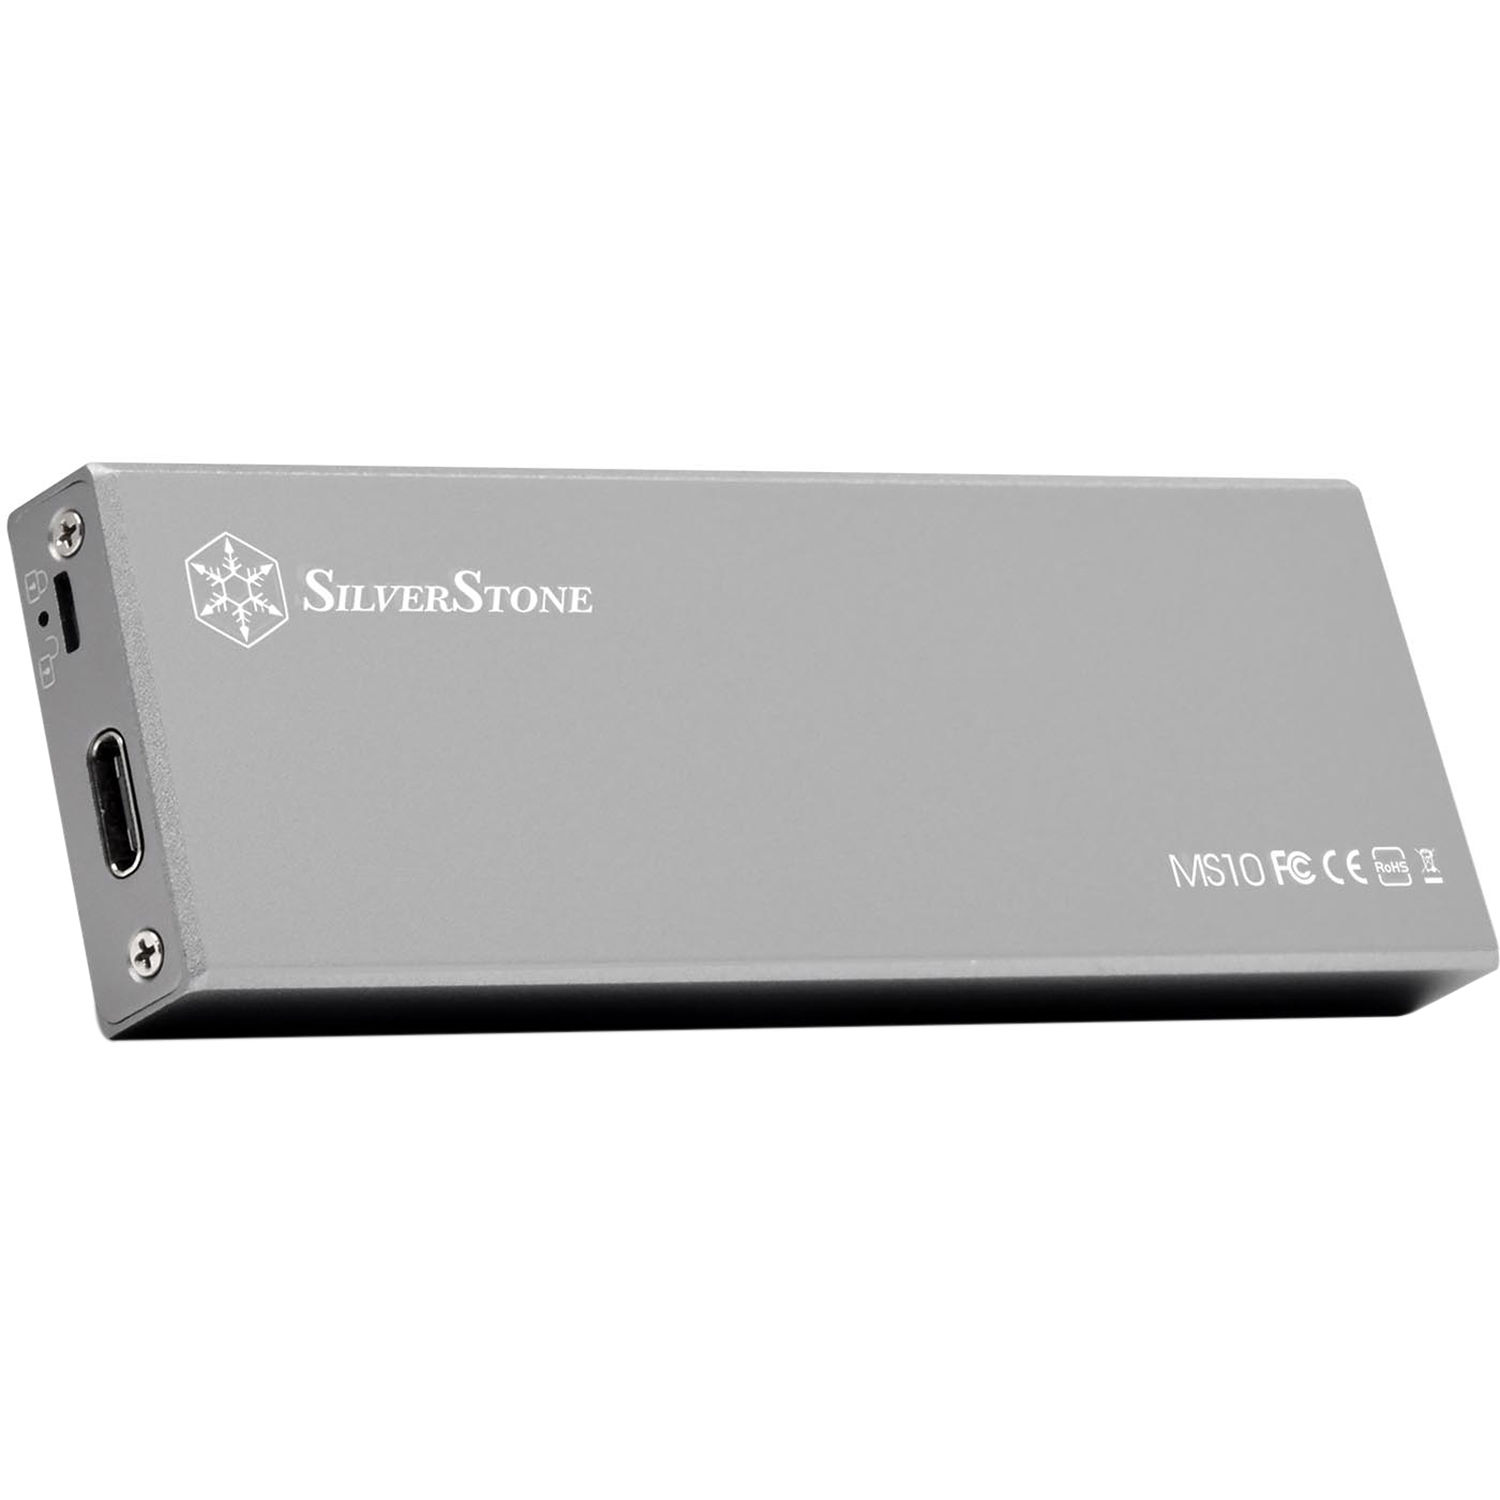 Ms 10 c. Silverstone ms11. Внешний SSD Type c. Transcend SUPERSPEED USB 3.1 gen1. SSD внешний мини.